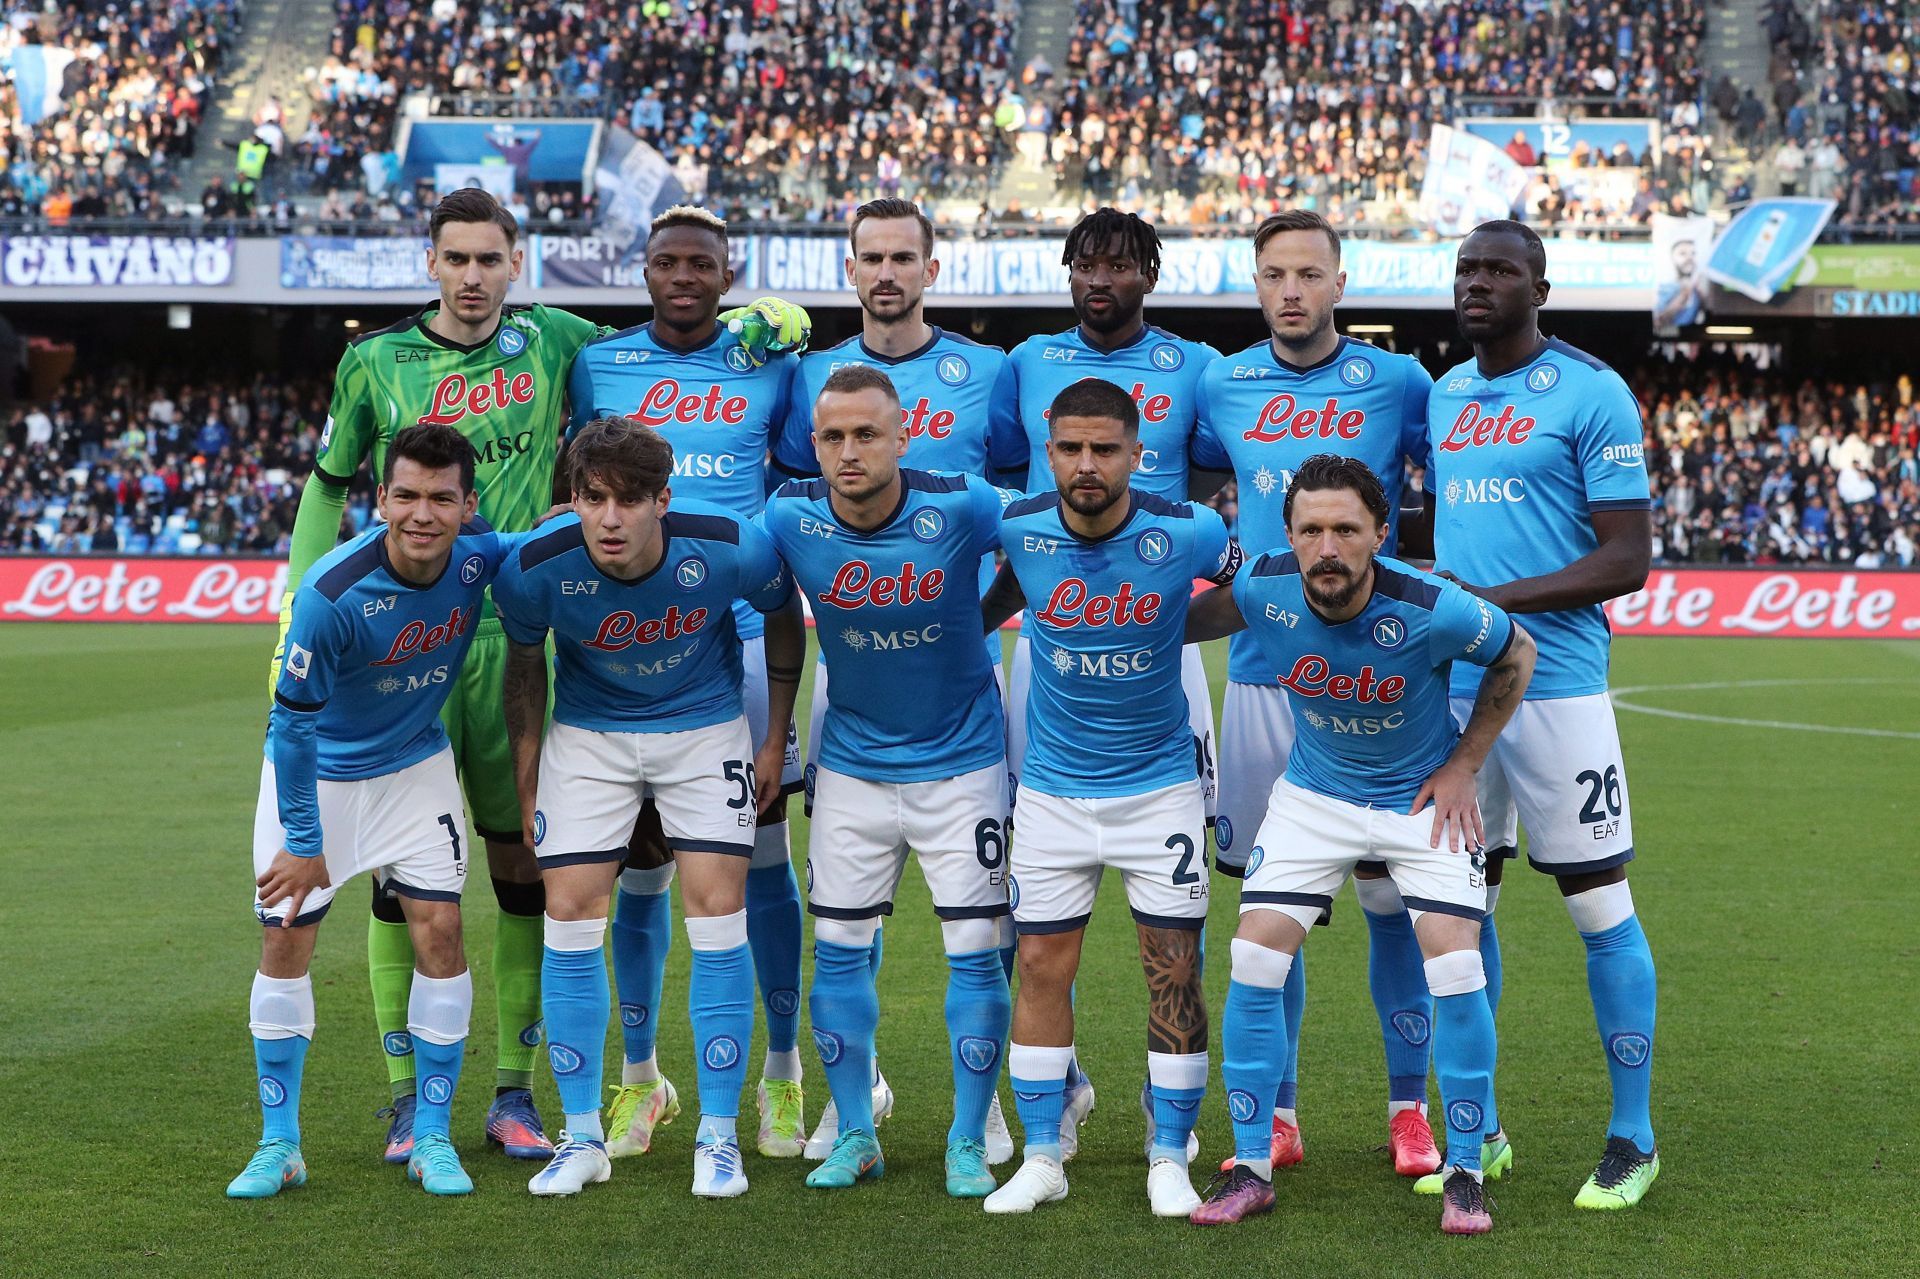 Napoli play Adana Demirspor on Wednesday